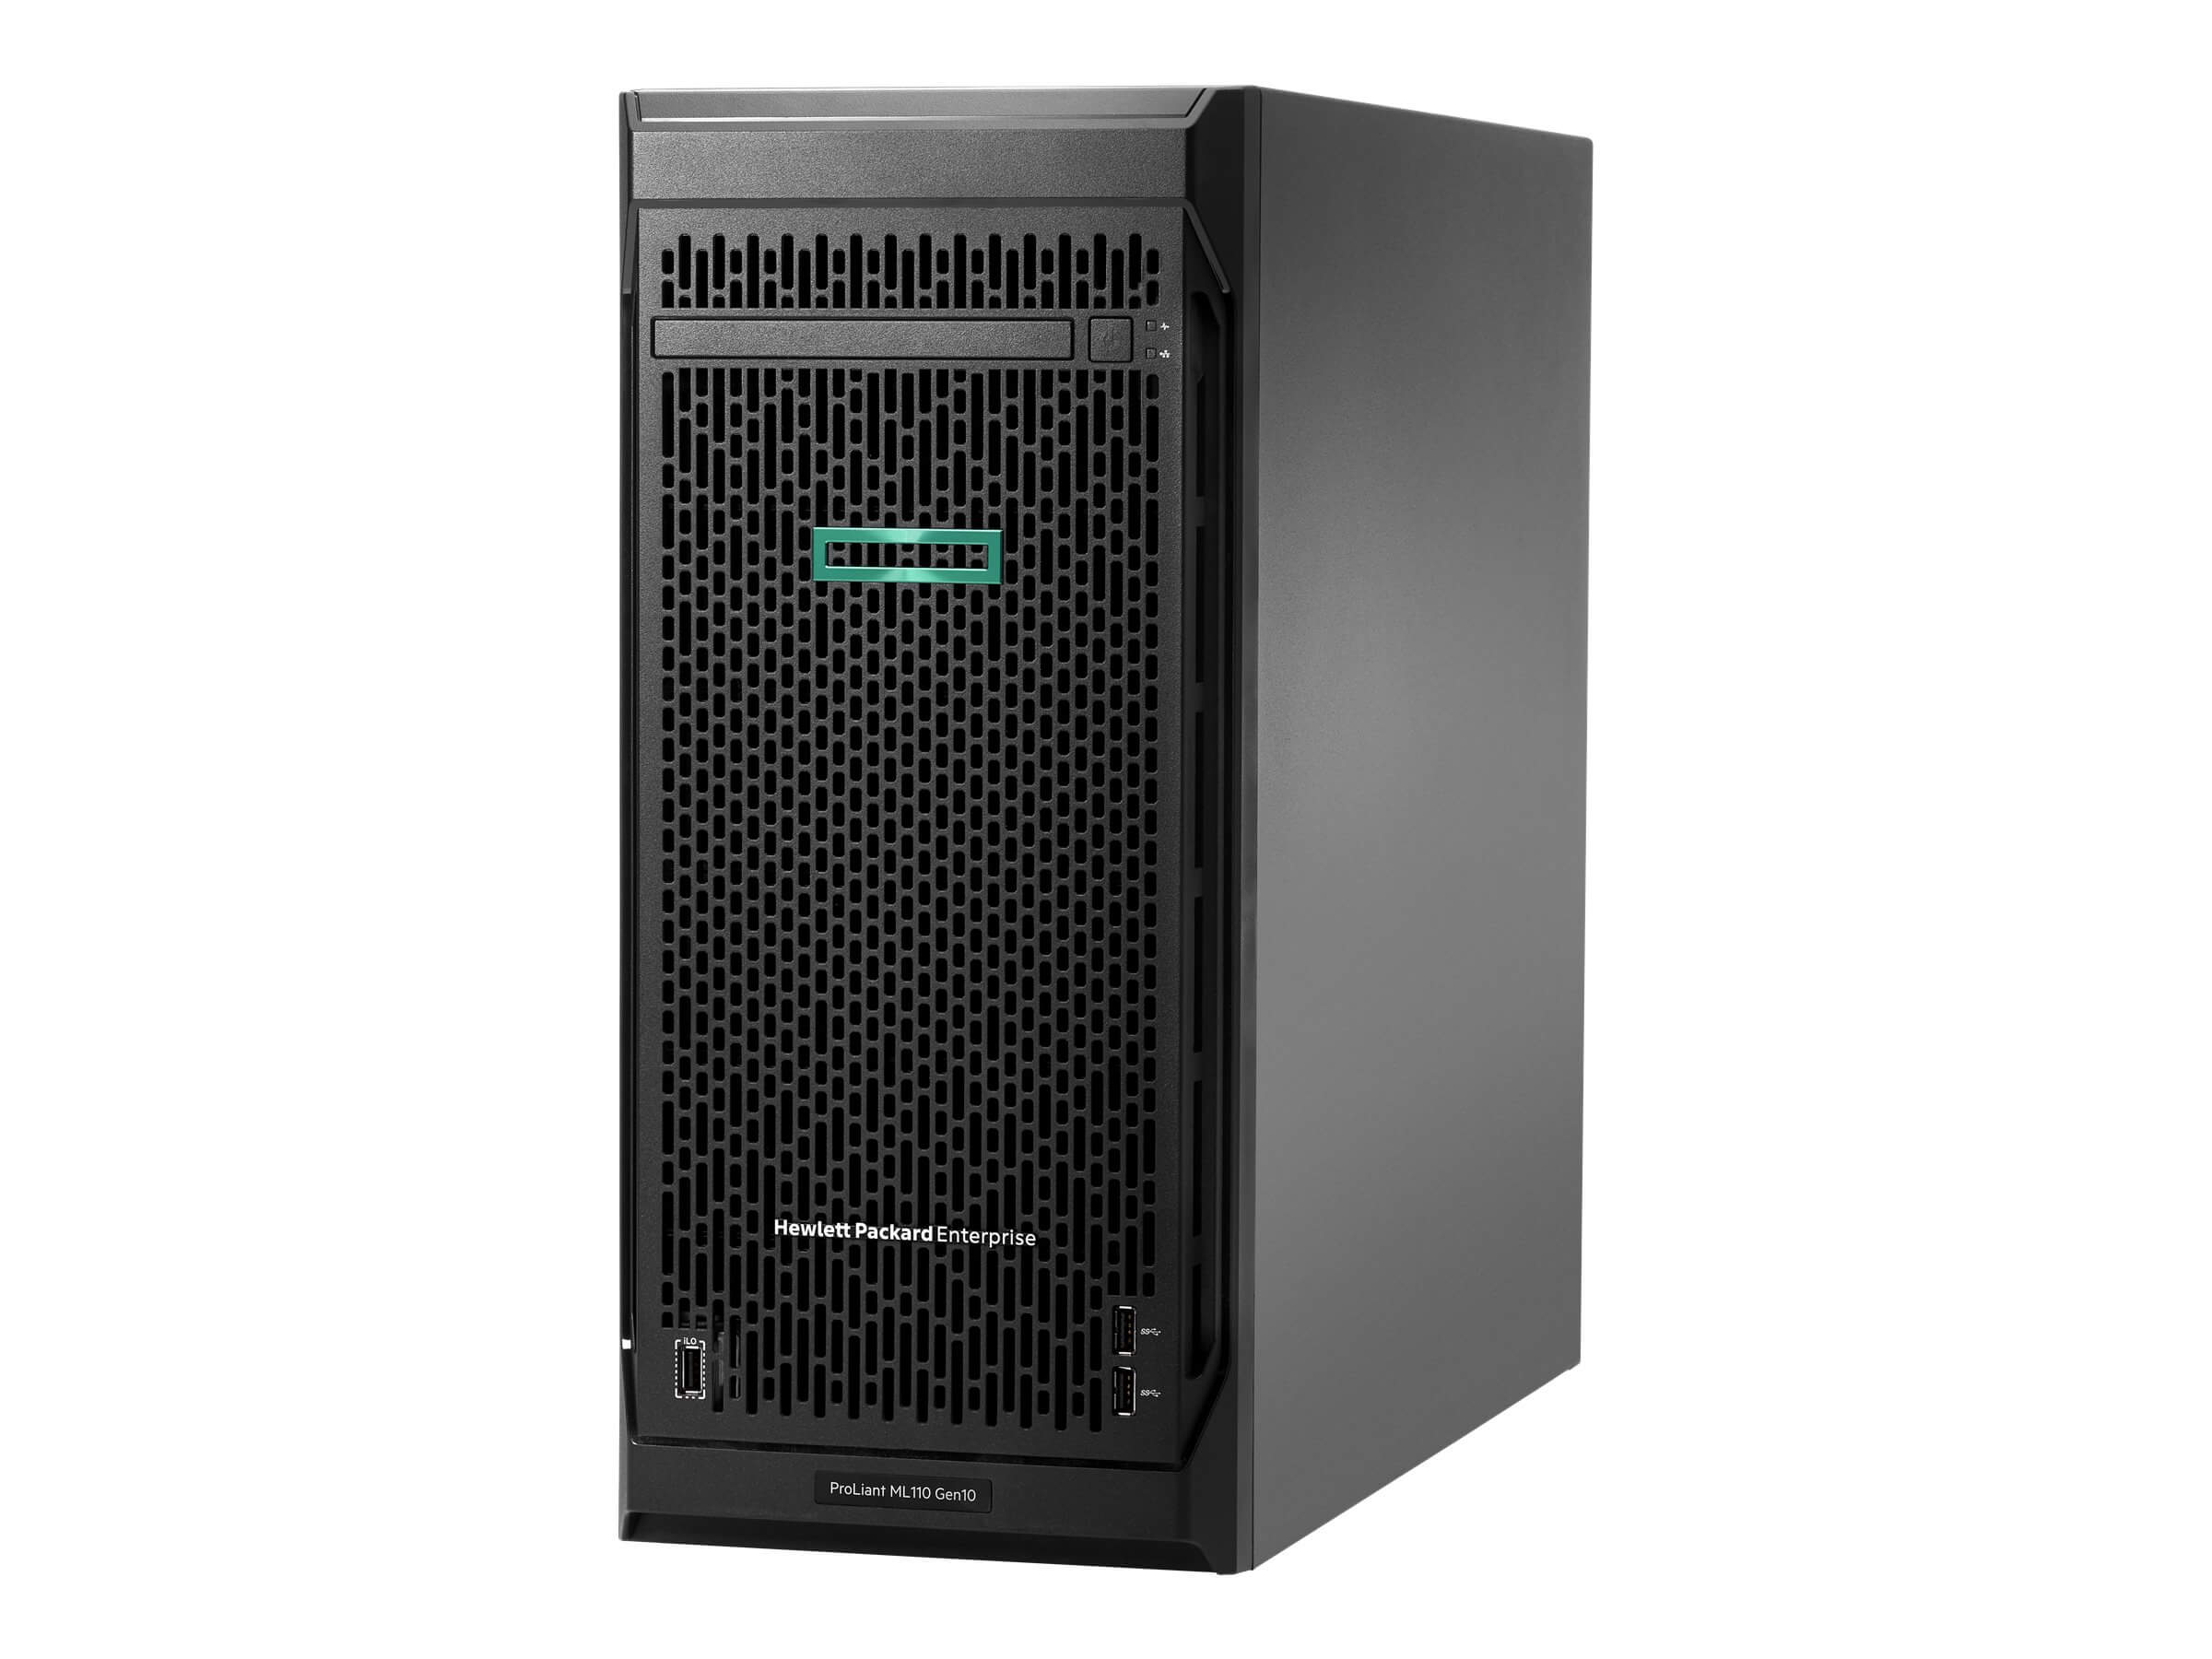 Tripleplay Server HP ML110 - 5 slot, Tower